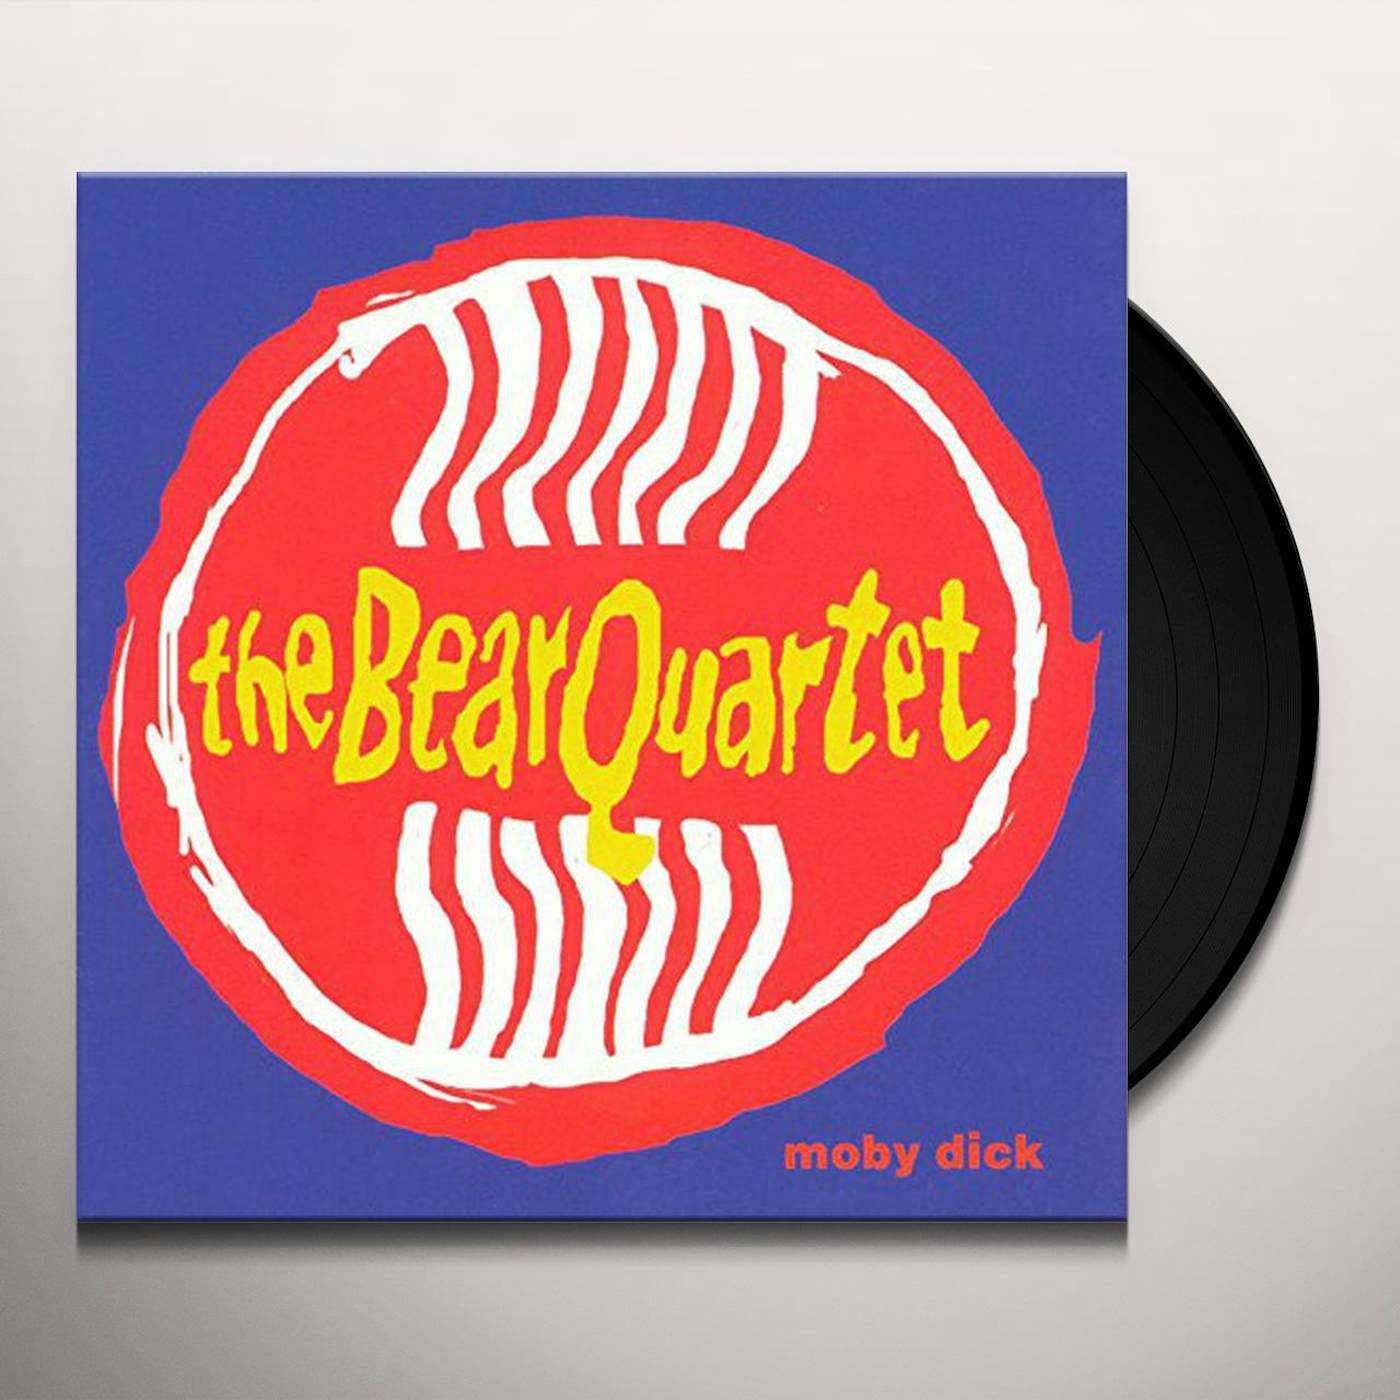 Bear Quartet Moby Dick Vinyl Record